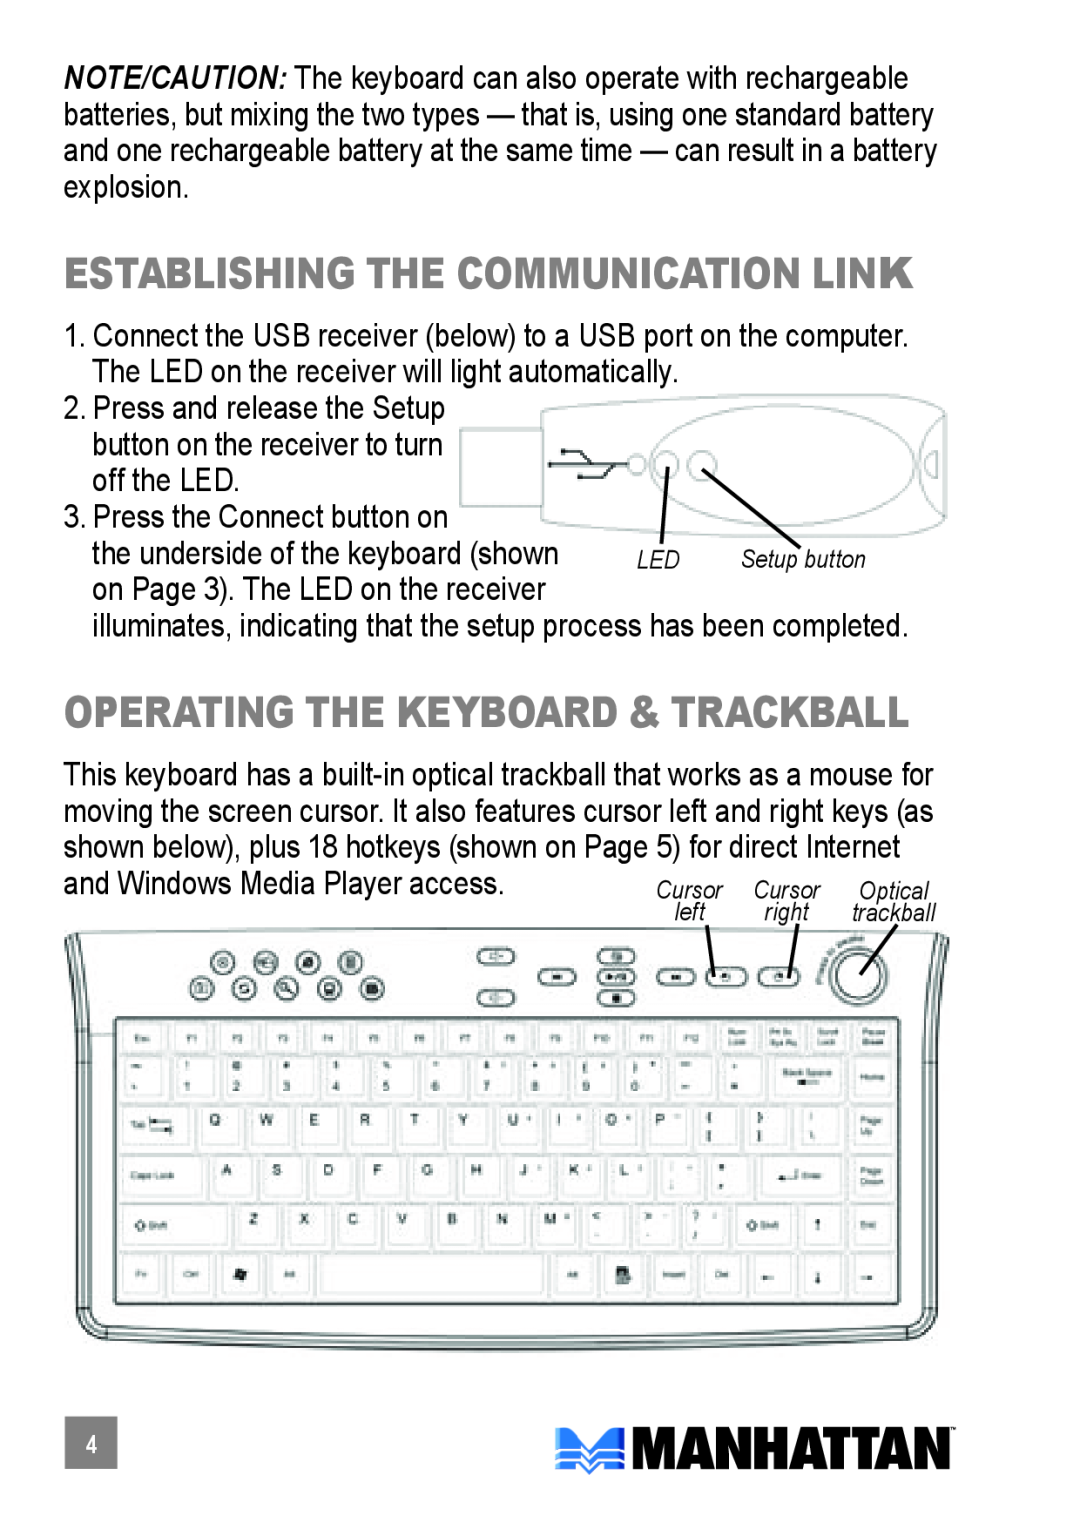 Manhattan Computer Products 176460 quick start establishing the communication link, Operating The Keyboard & Trackball 